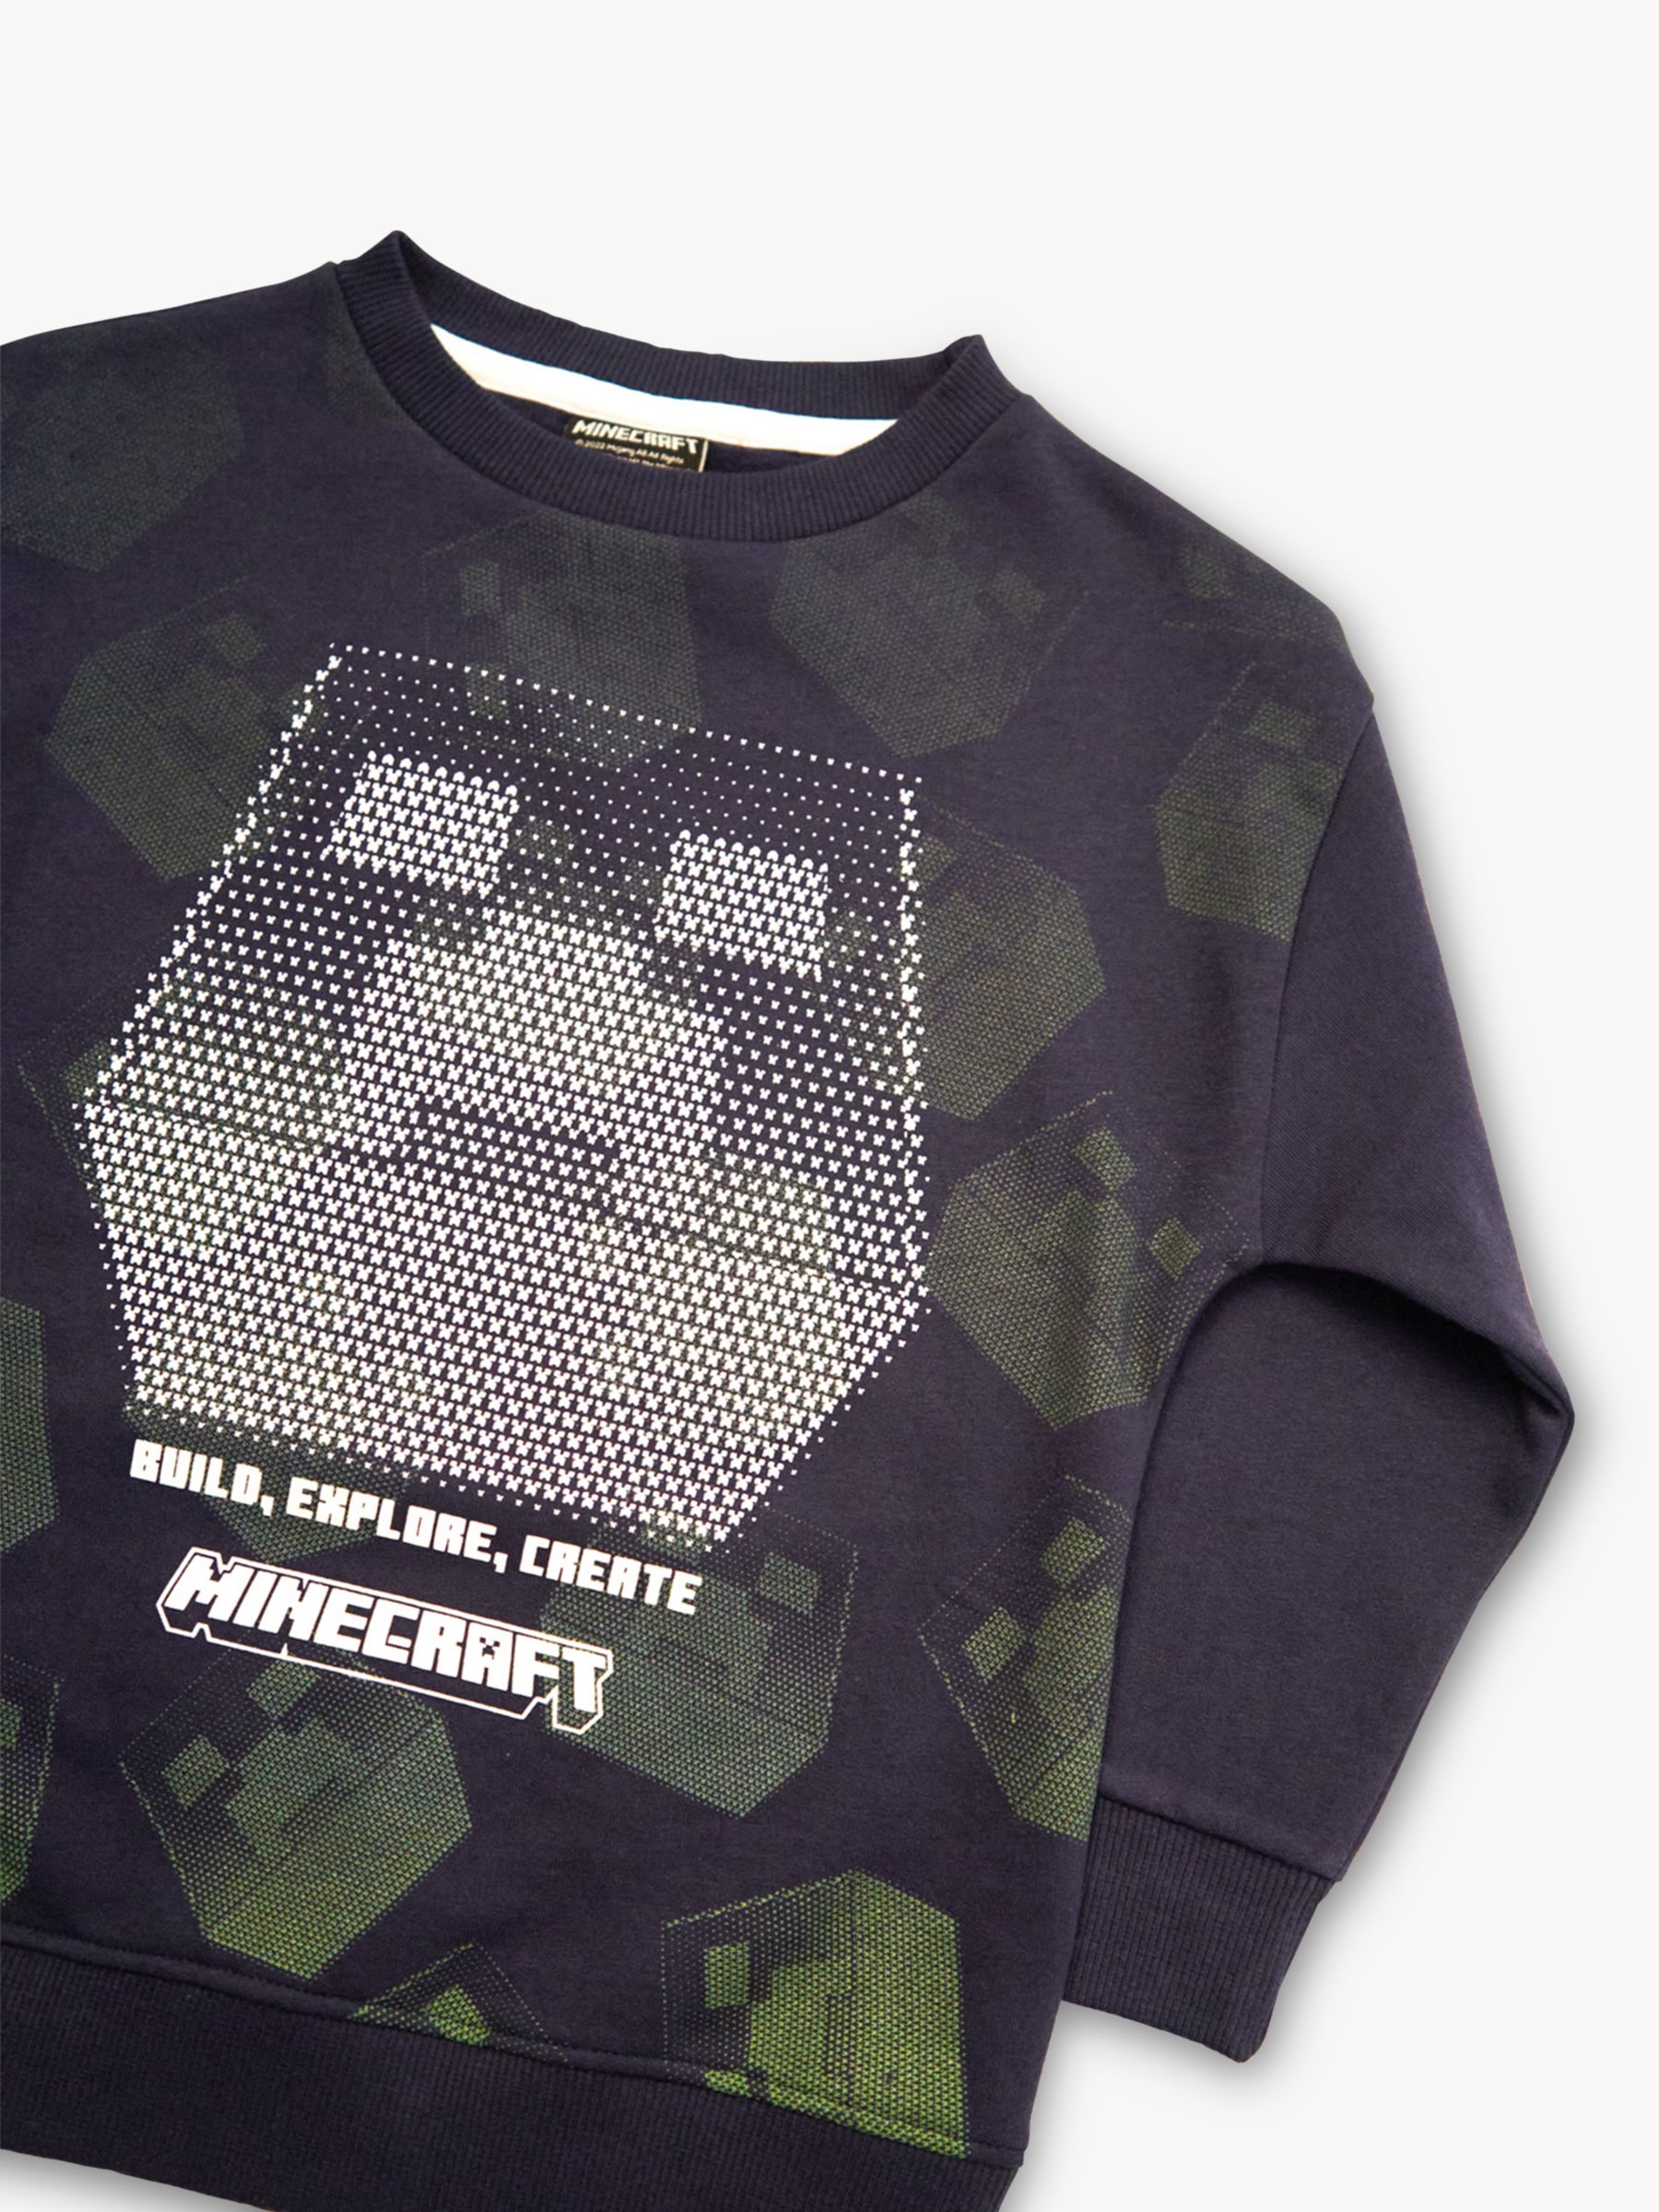 Angel & Rocket Kids' Minecraft Sweatshirt, Navy, 3-4 years